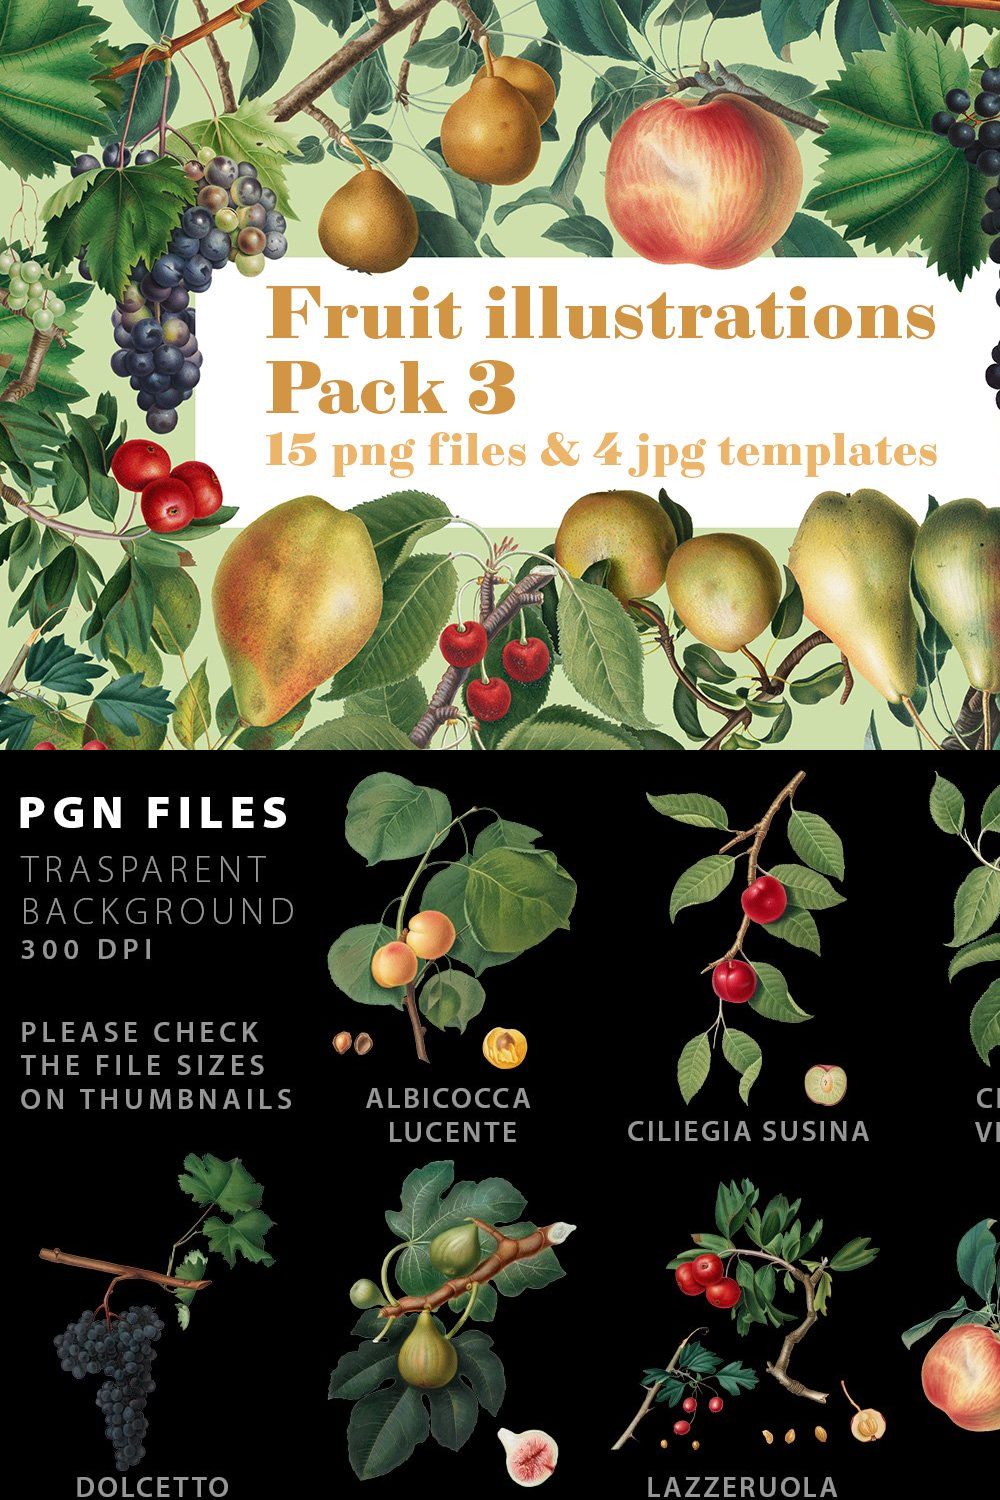 Fruit Illustrations pack 3 pinterest preview image.